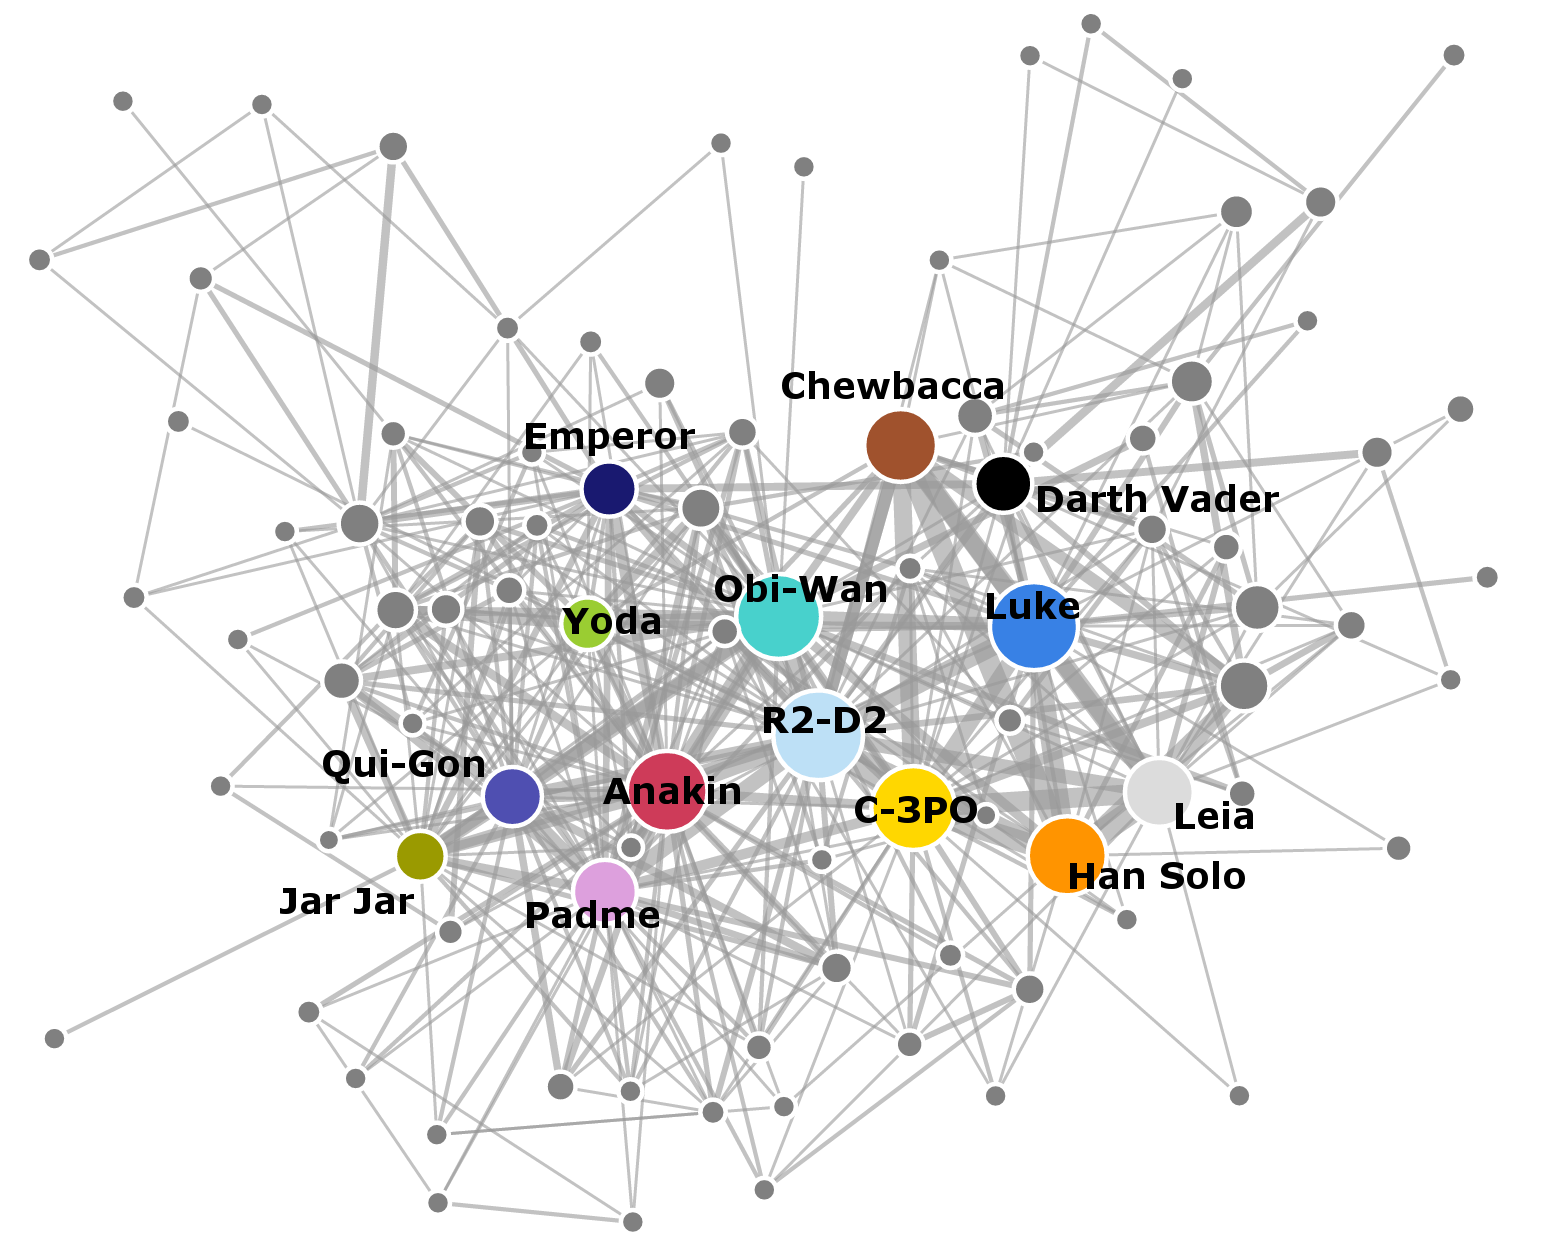 Gabasova's Starwars social network plot was prepared with D3.js